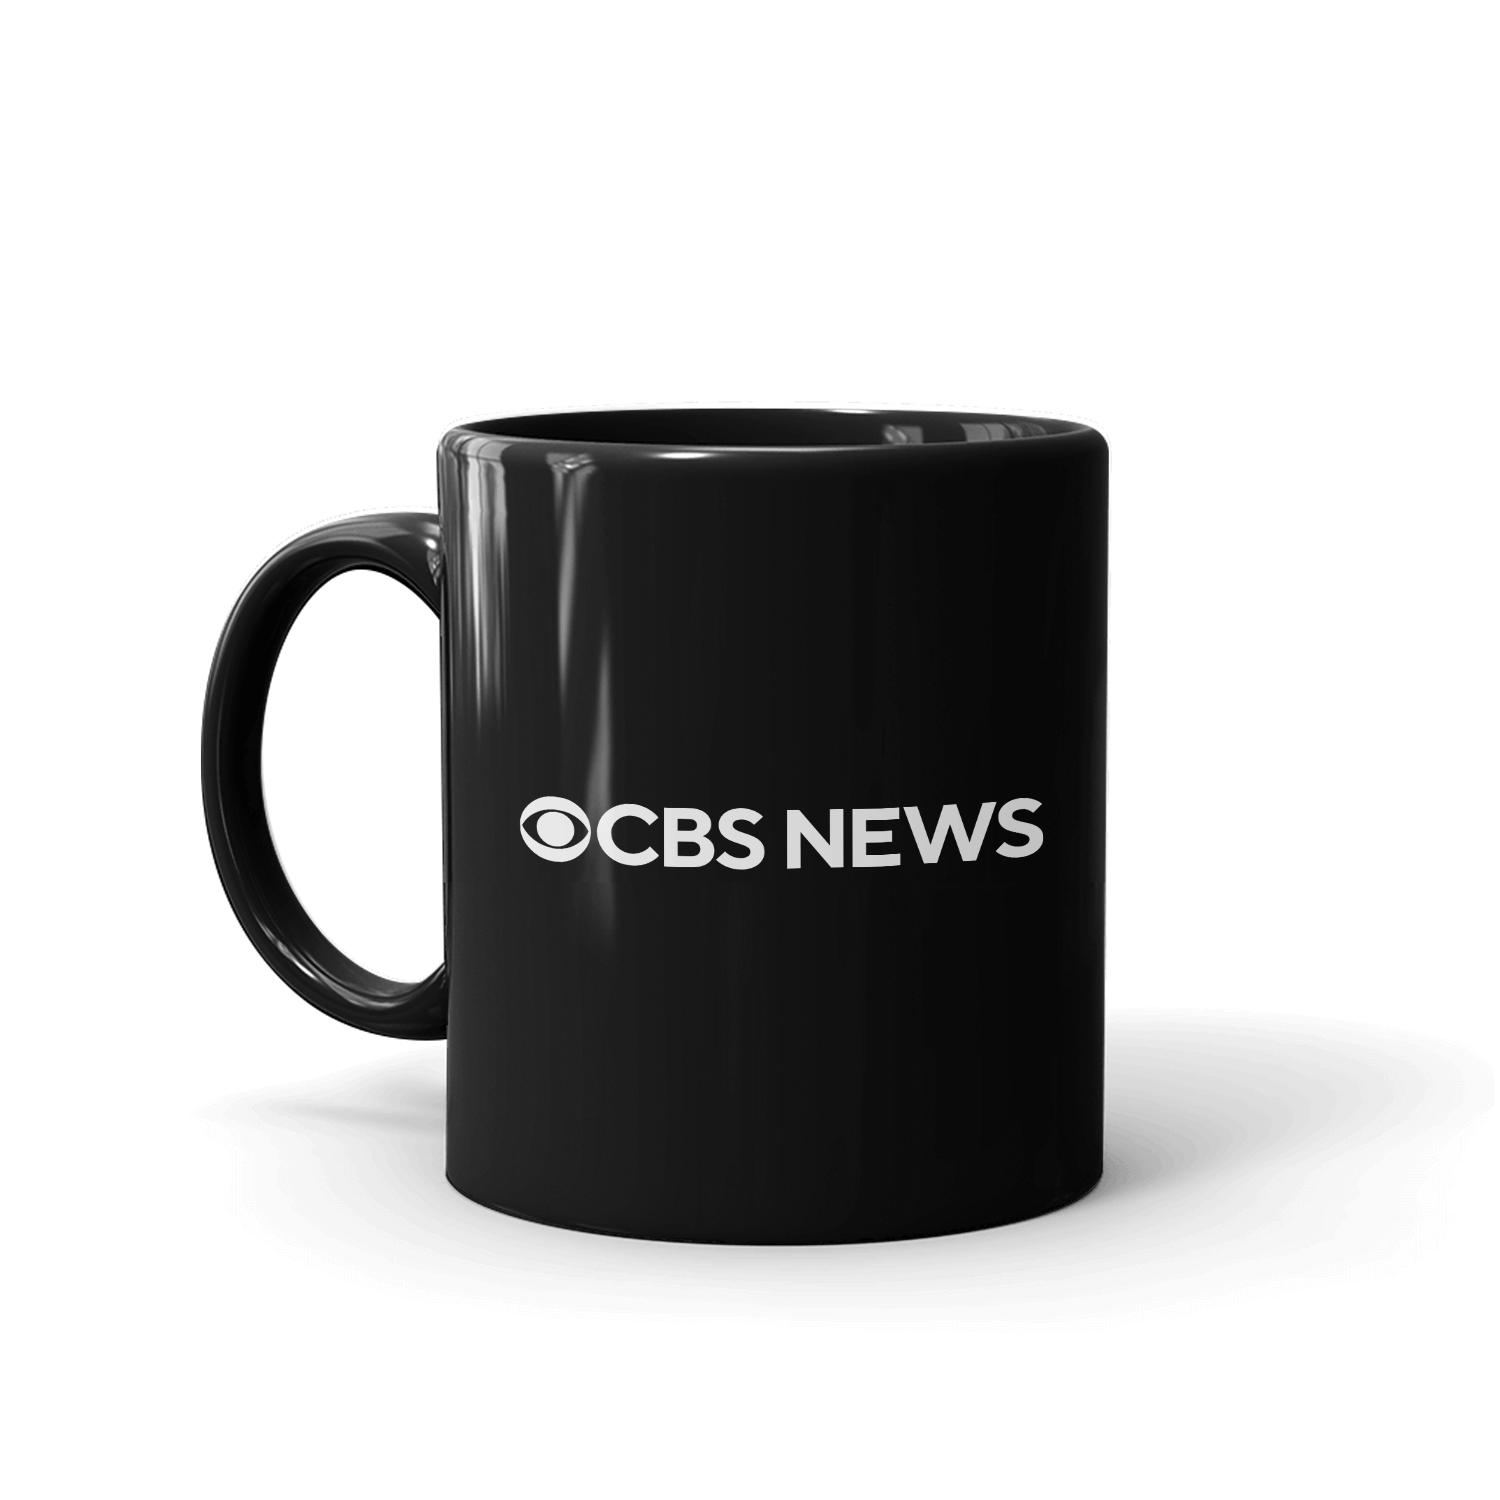 CBS News CBS Mornings Black Mug